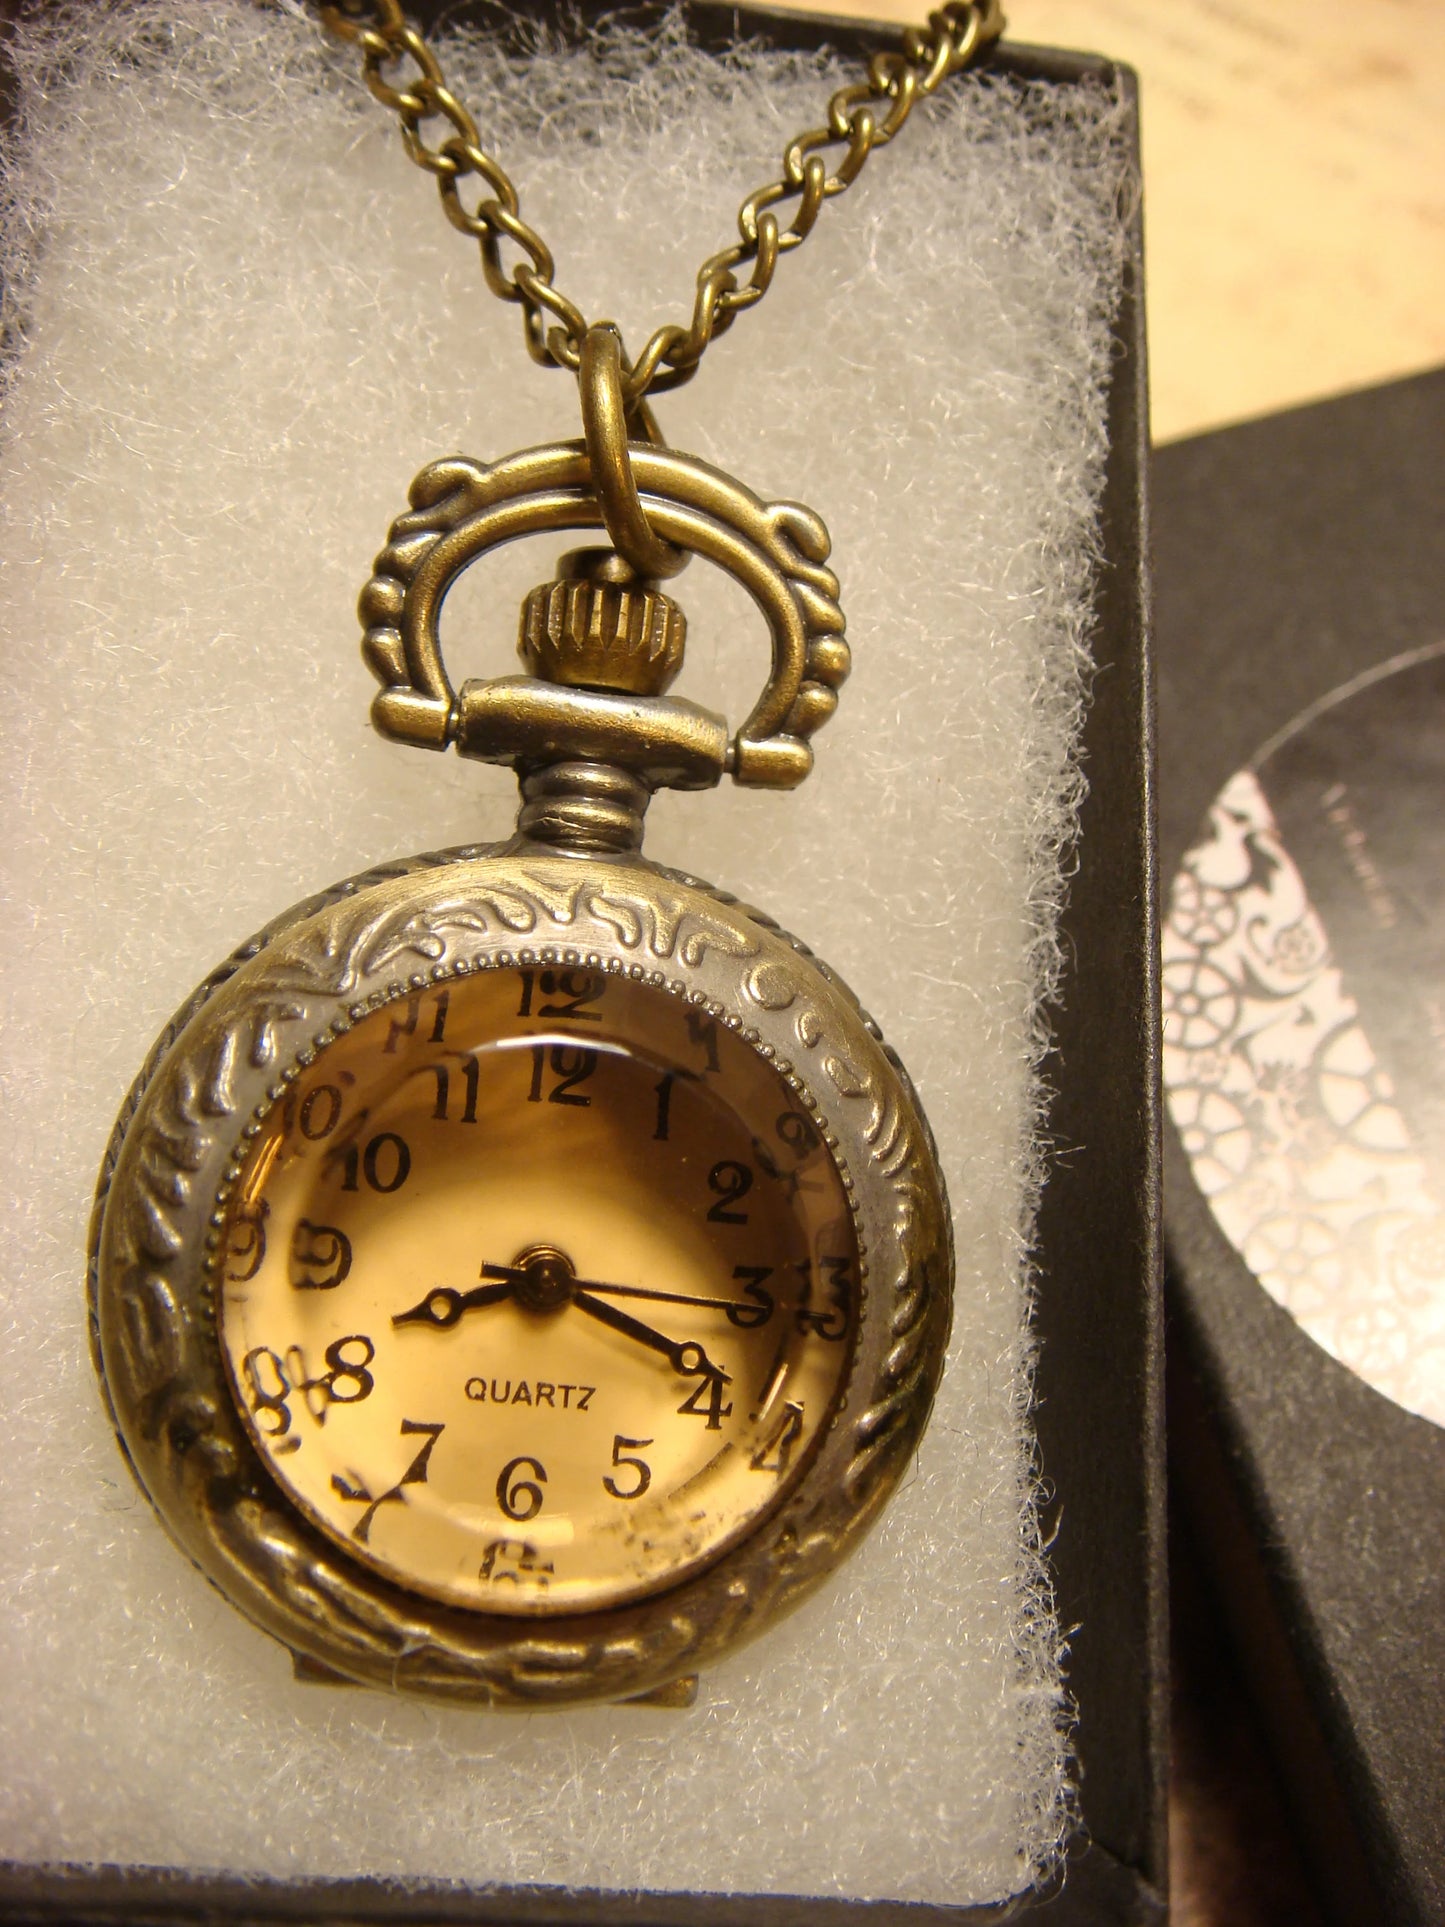 Working Amber Necklace Watch in Antique Bronze